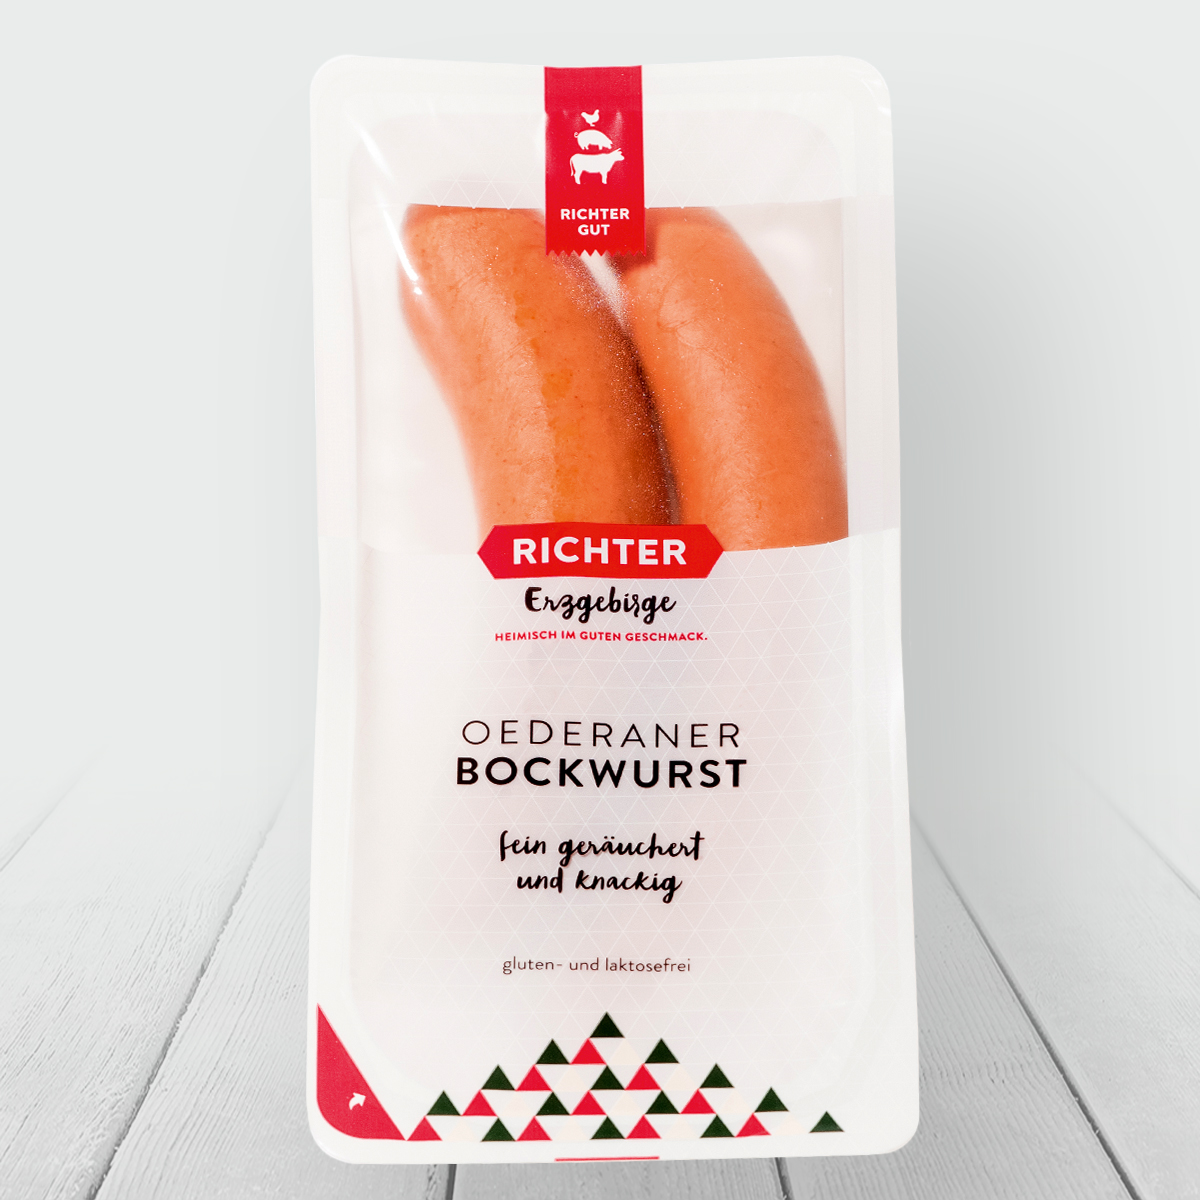 Oederaner Bockwurst